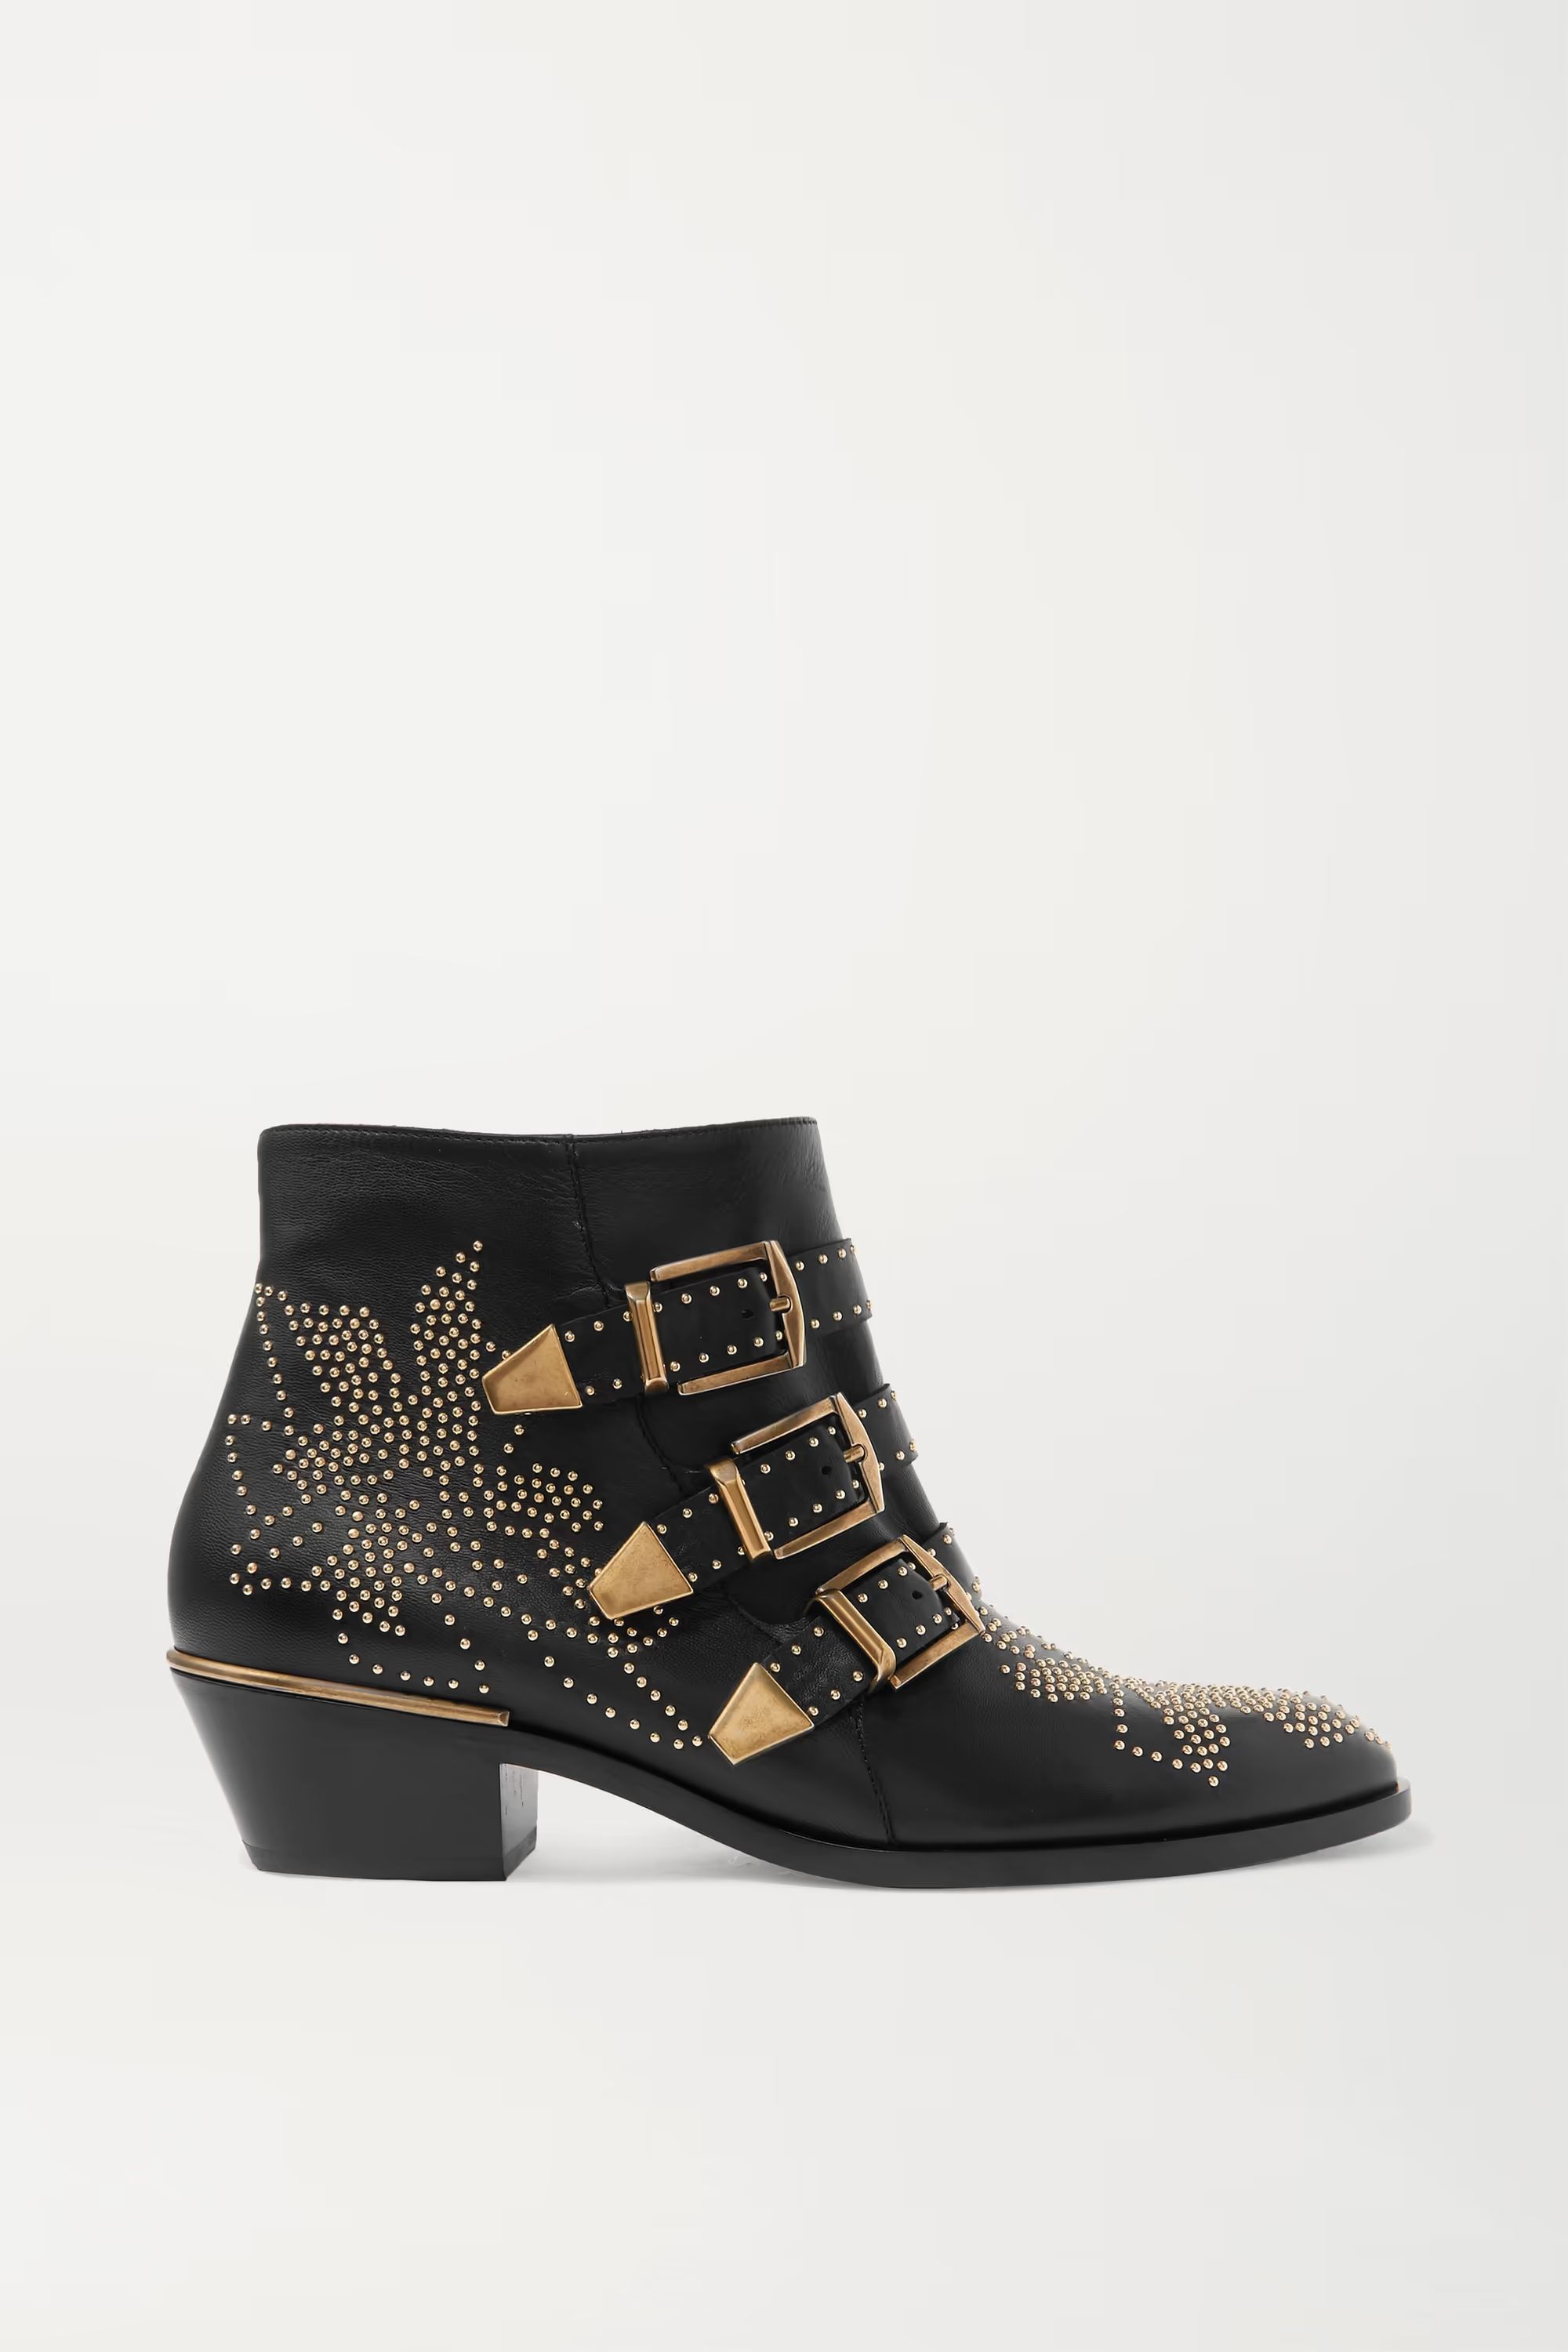 Chloé Susanna studded leather ankle boots | NET-A-PORTER (US)